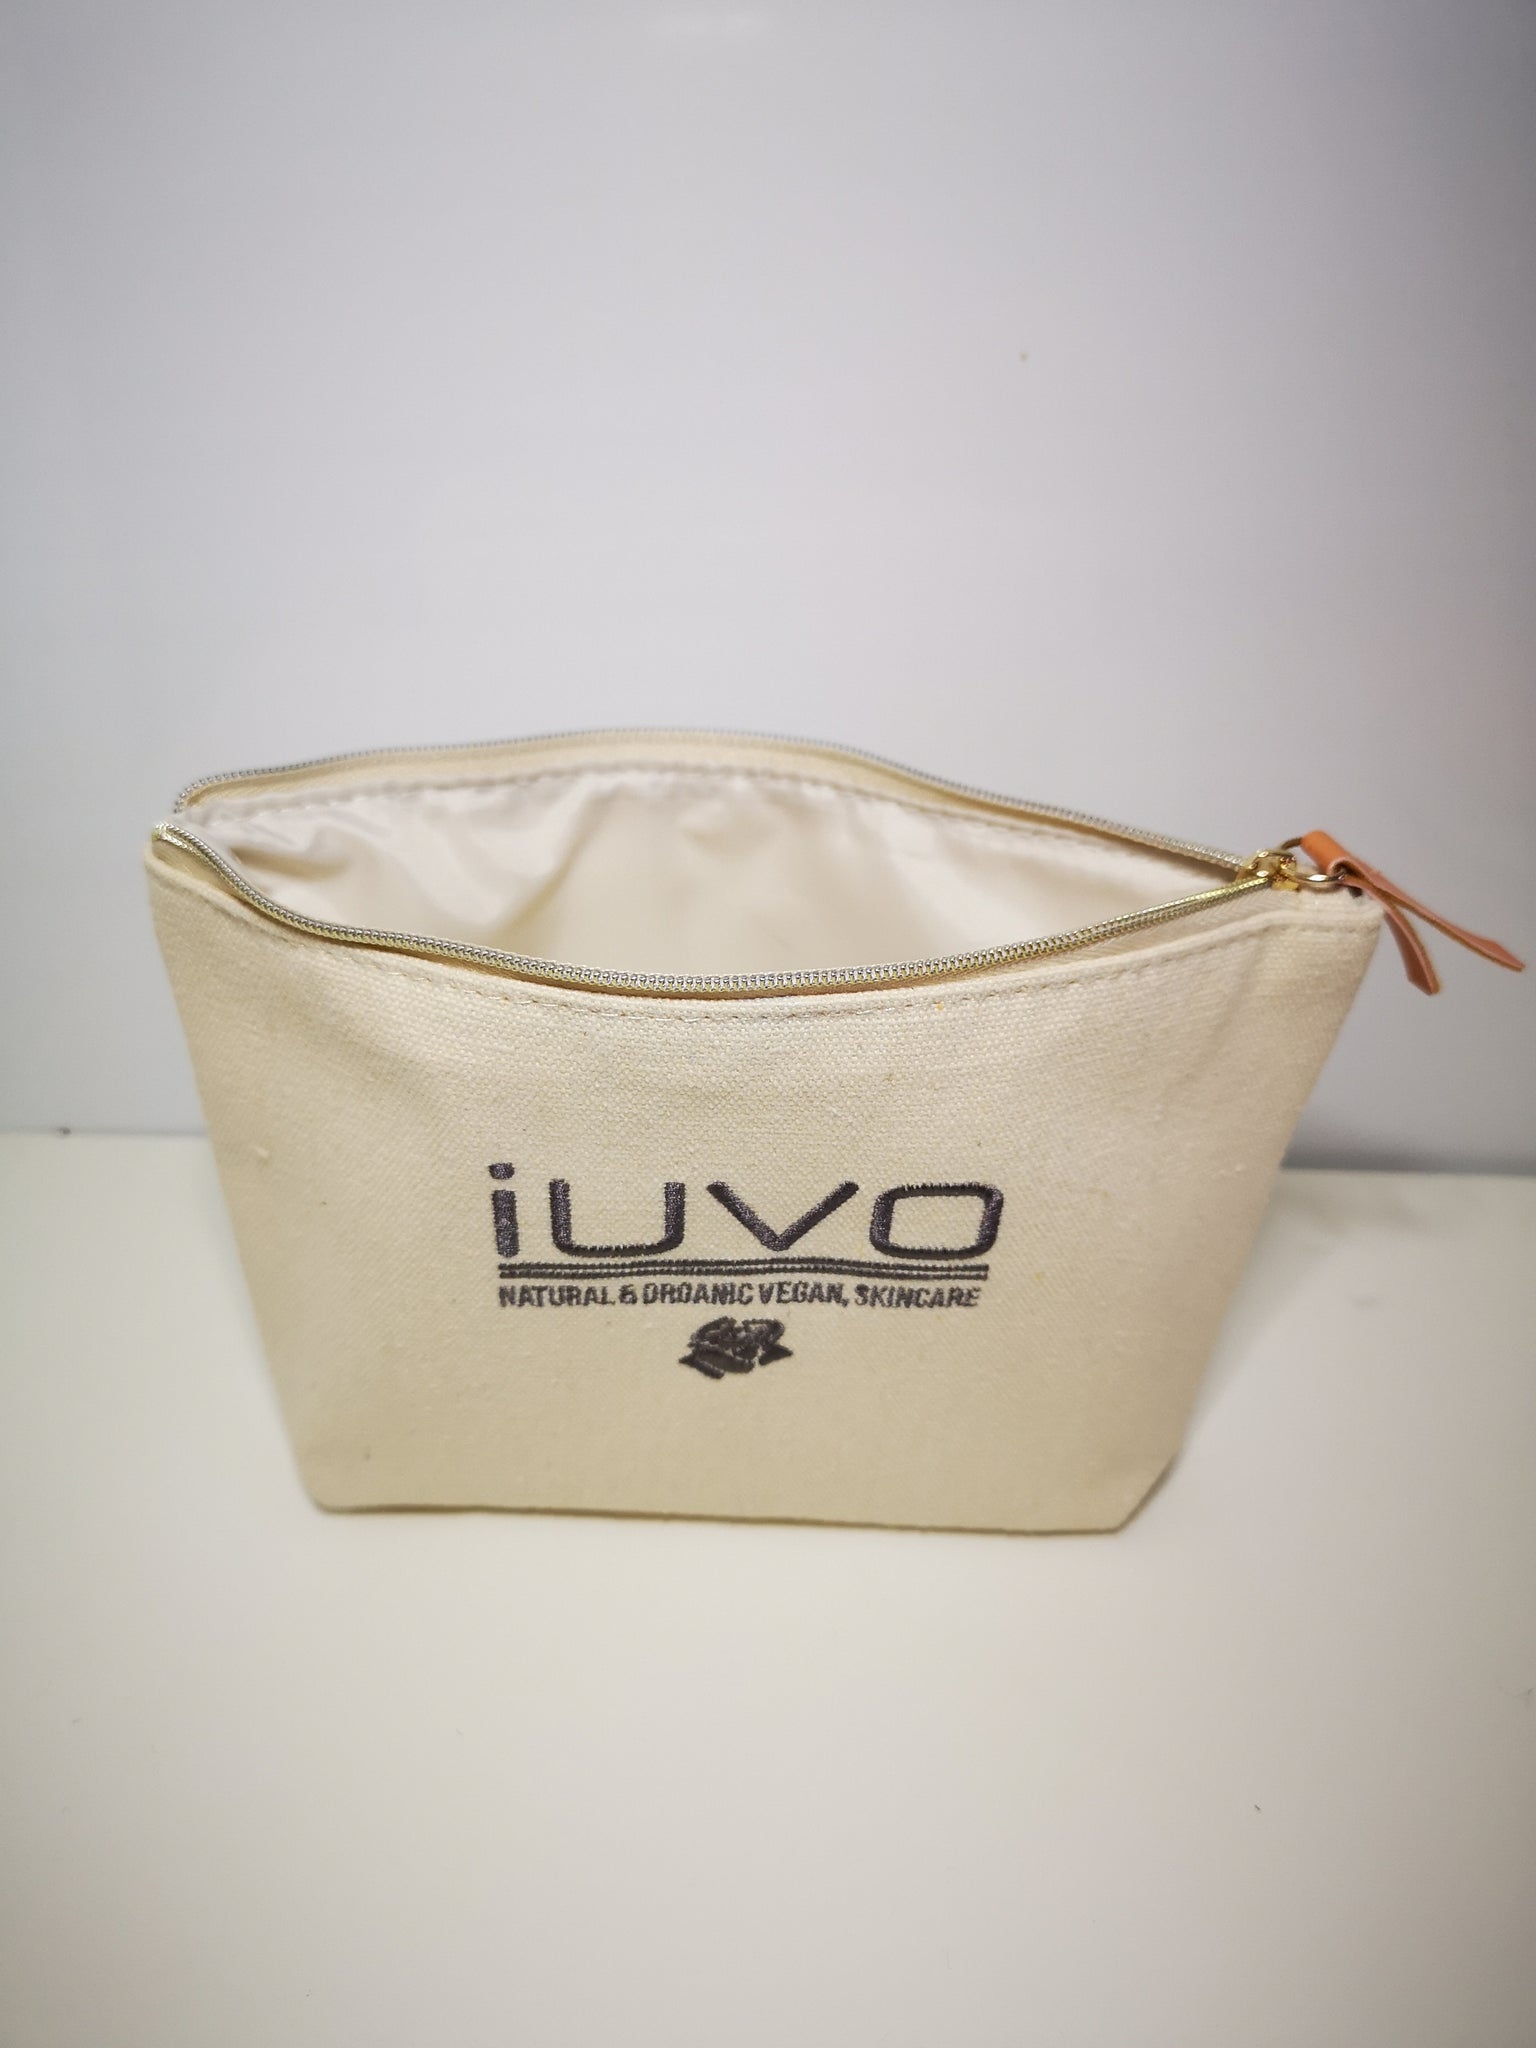 Iuvo Vanity bag